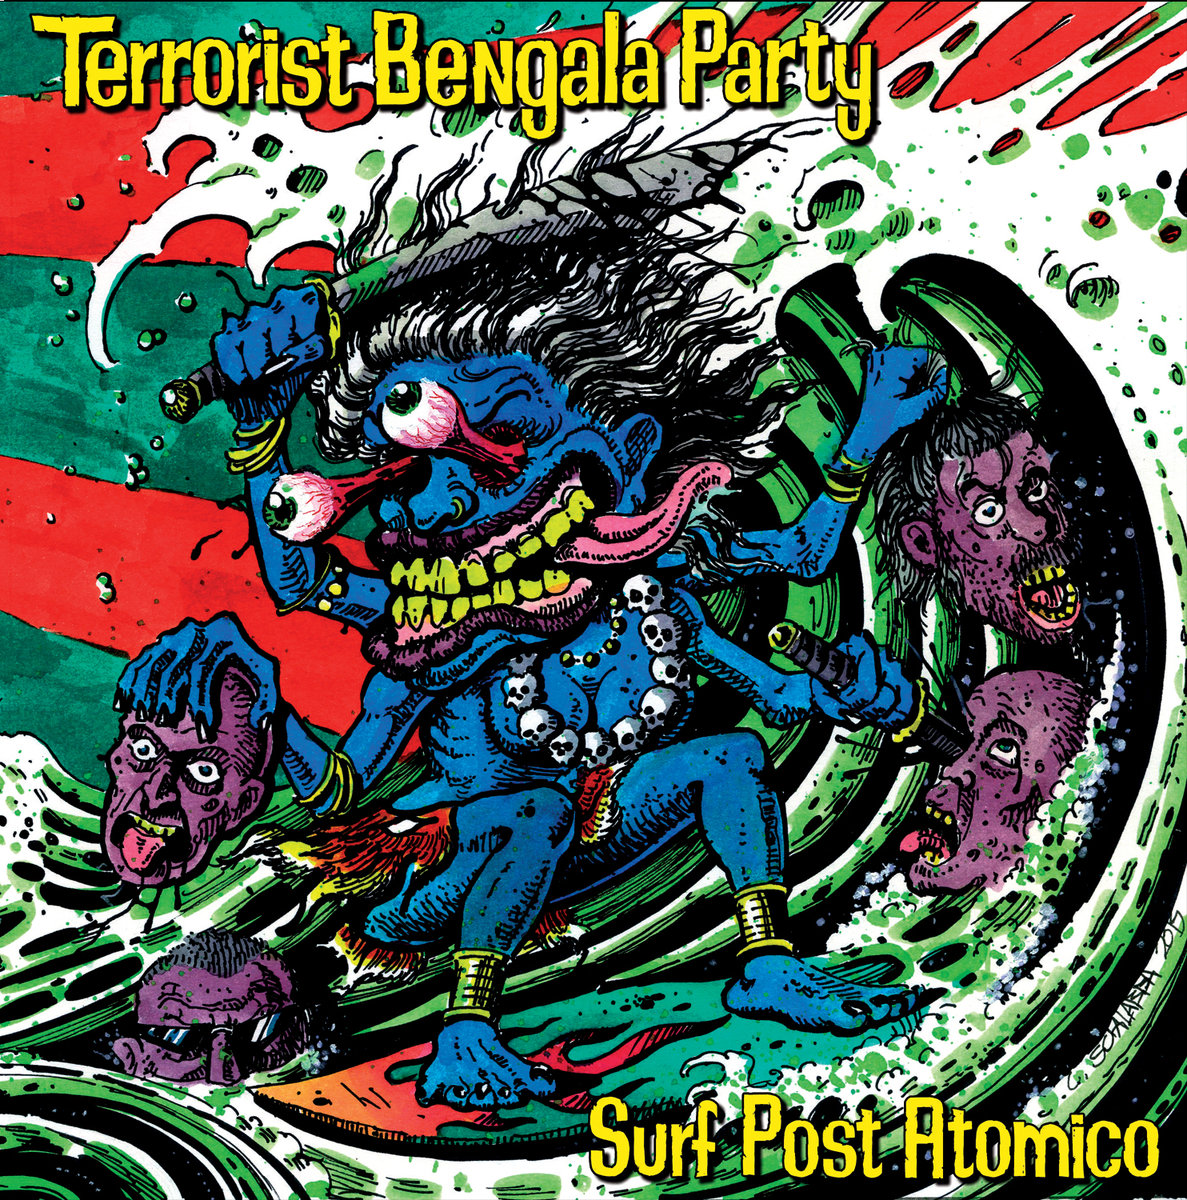 Terrorist Bengala Party - Surf Post Atomico